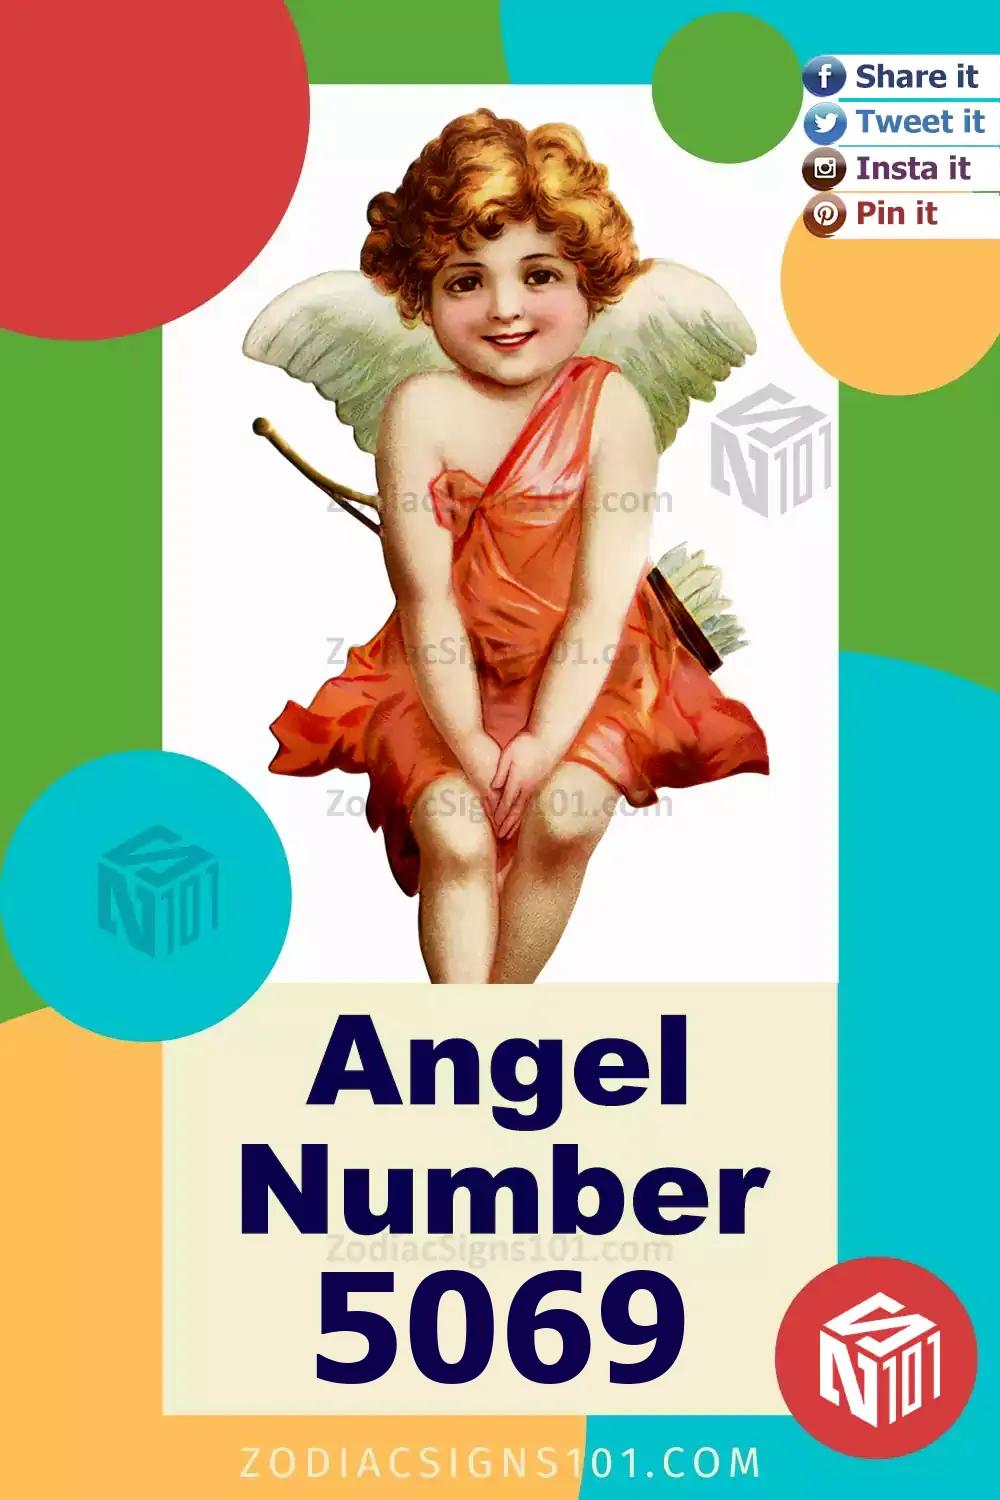 5069-Angel-Number-Meaning.jpg